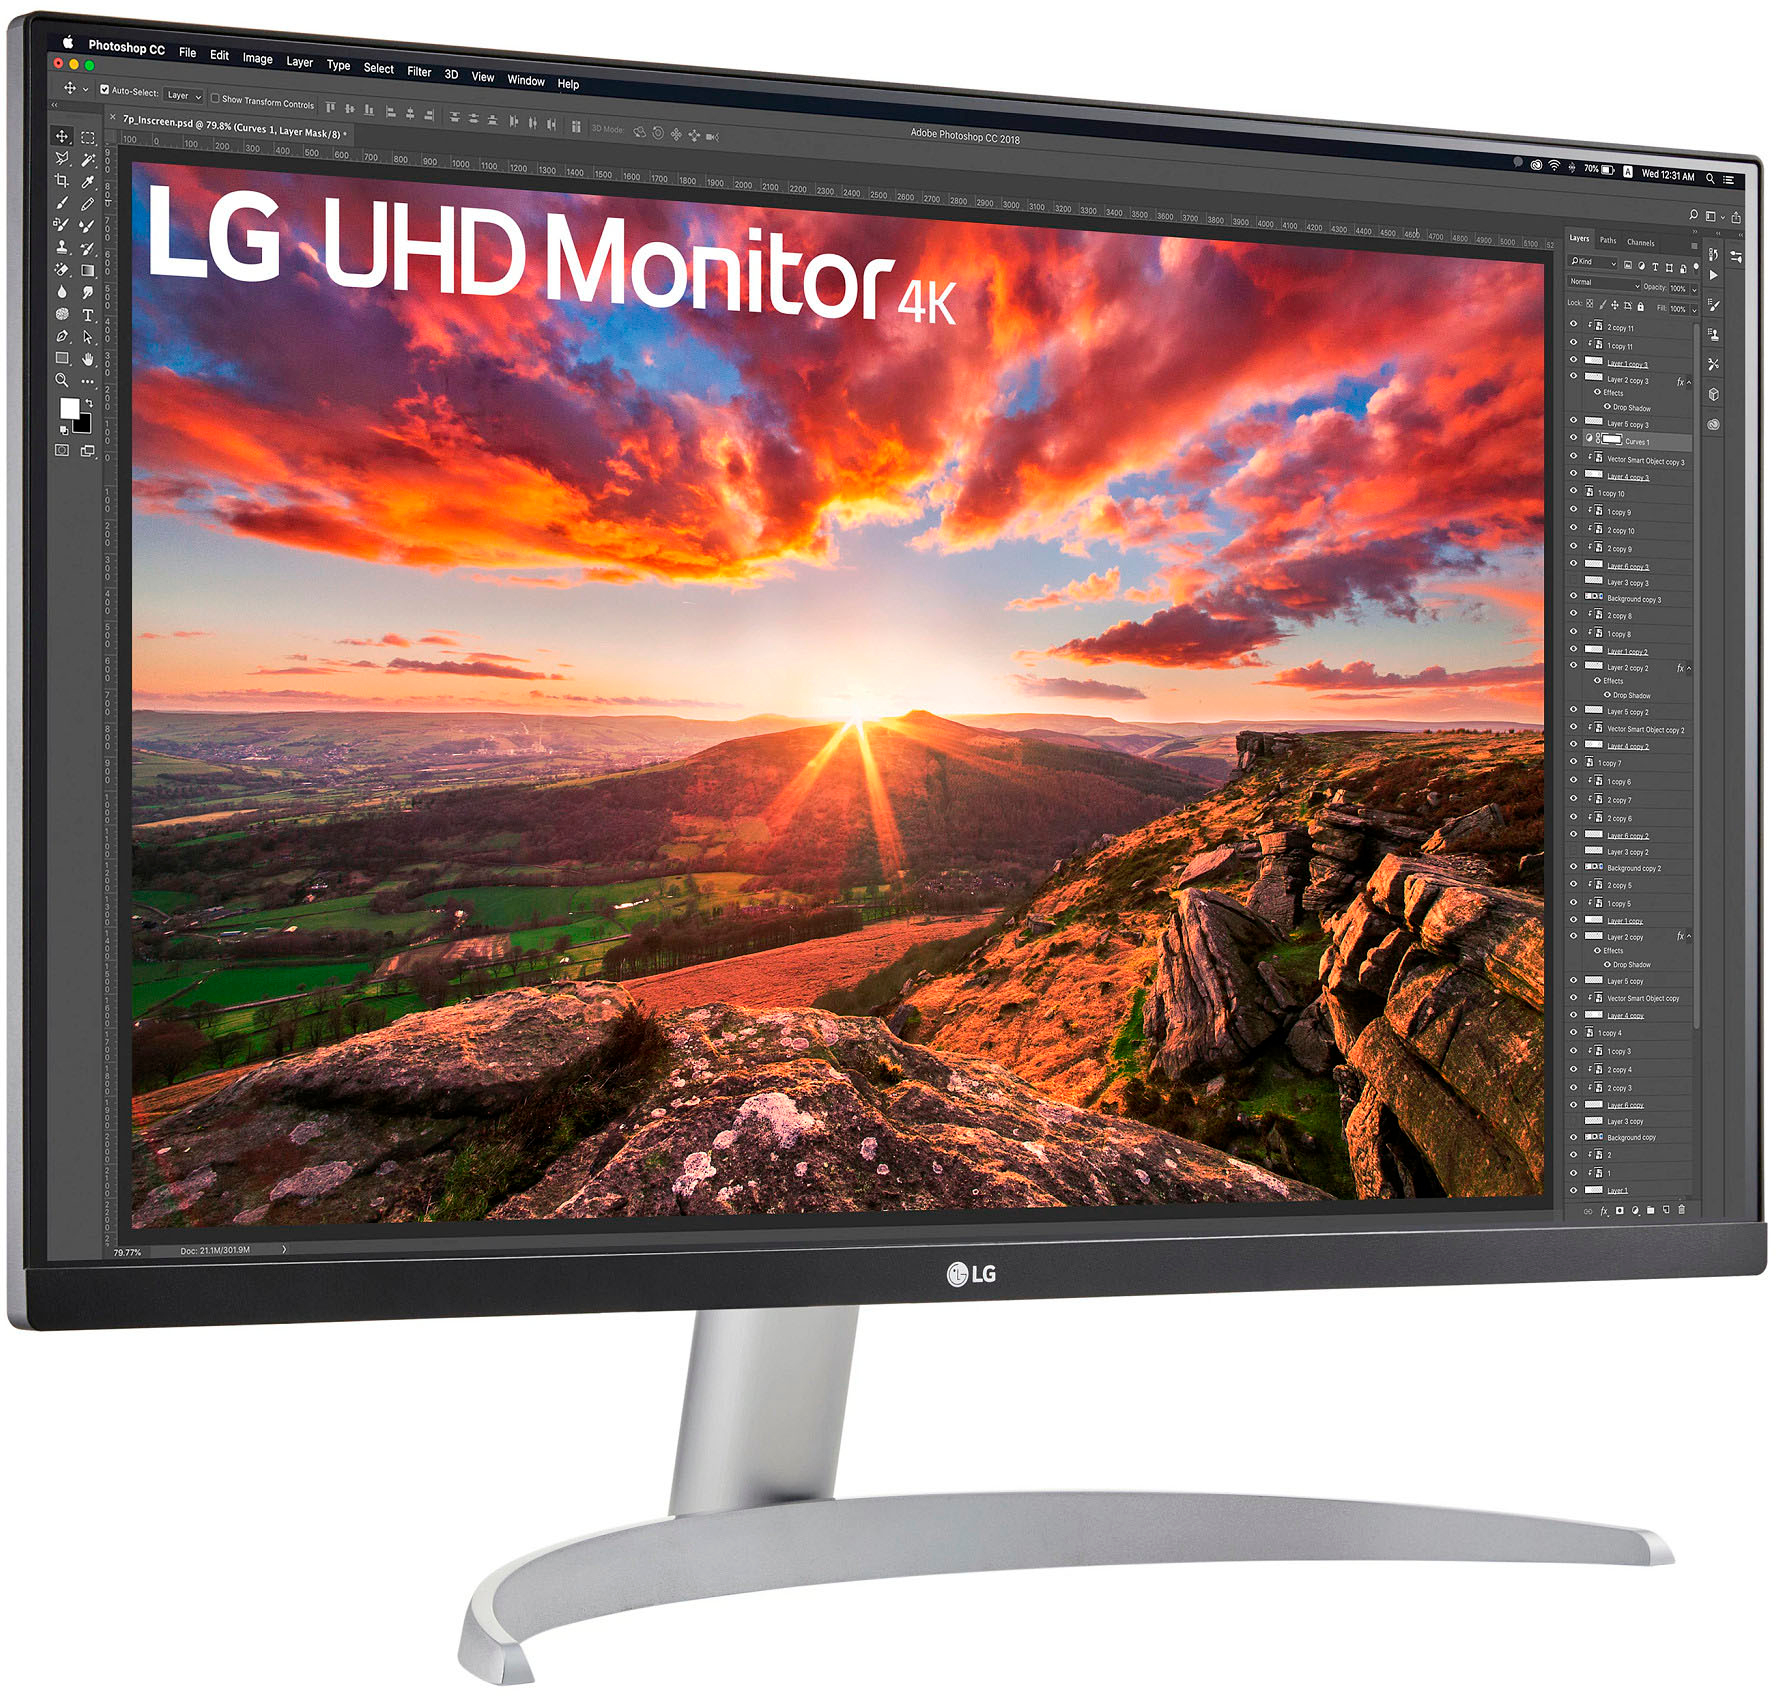 Back View: LG - 27” IPS LED 4K UHD AMD FreeSync  Monitor with HDR (HDMI, DisplayPort, USB) - White